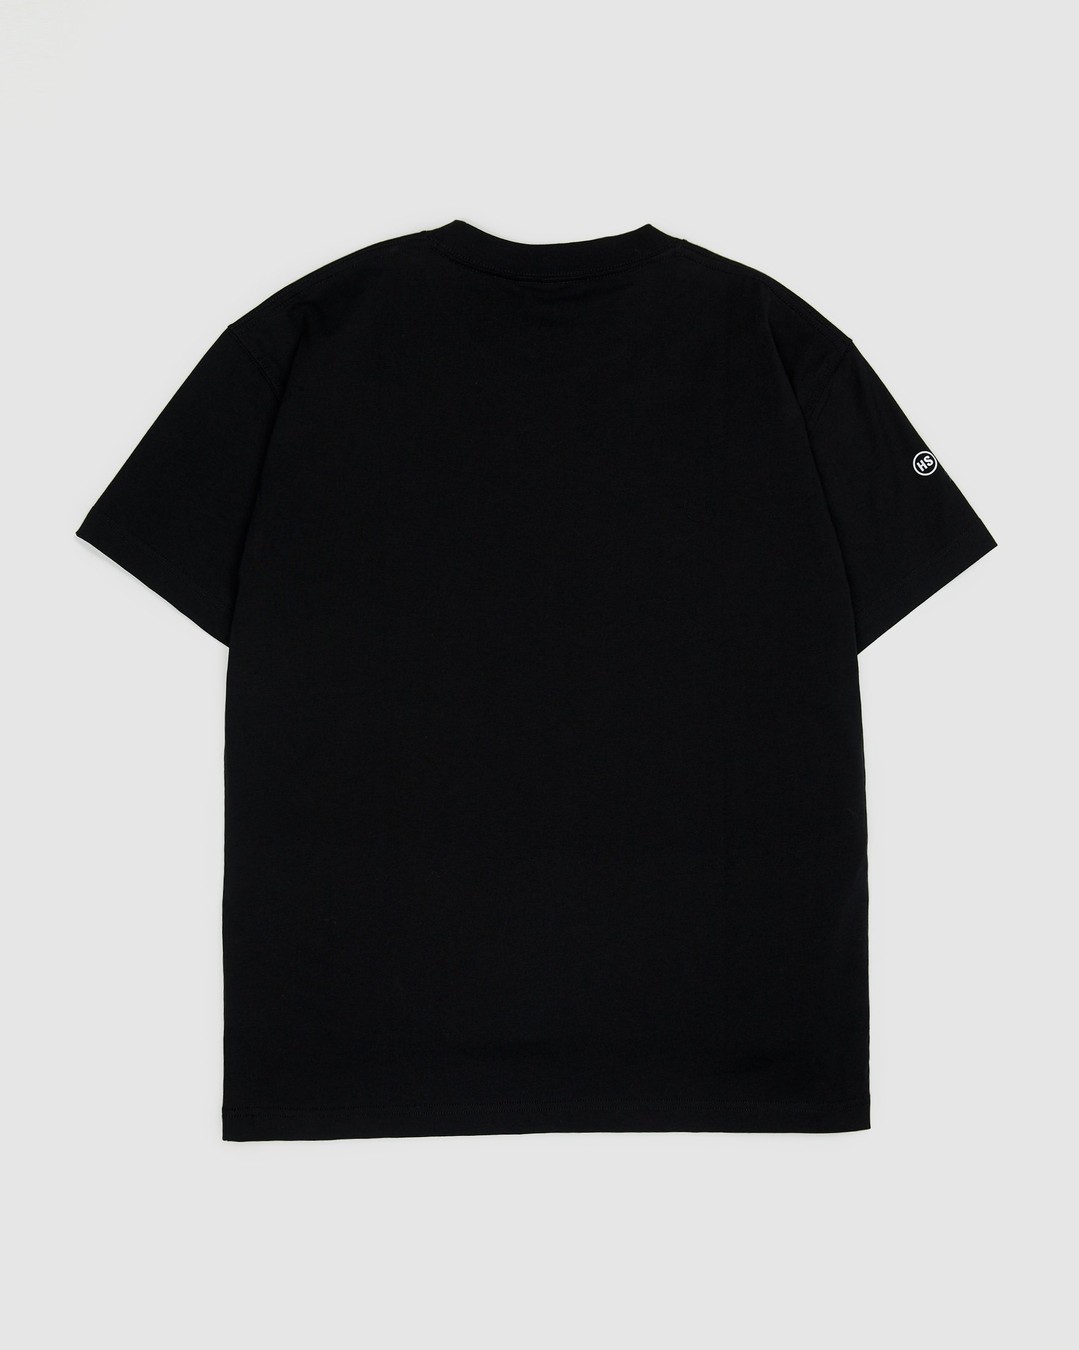 Colette Mon Amour x Soulland – Snoopy Bed Black T-Shirt - T-Shirts - Black - Image 2